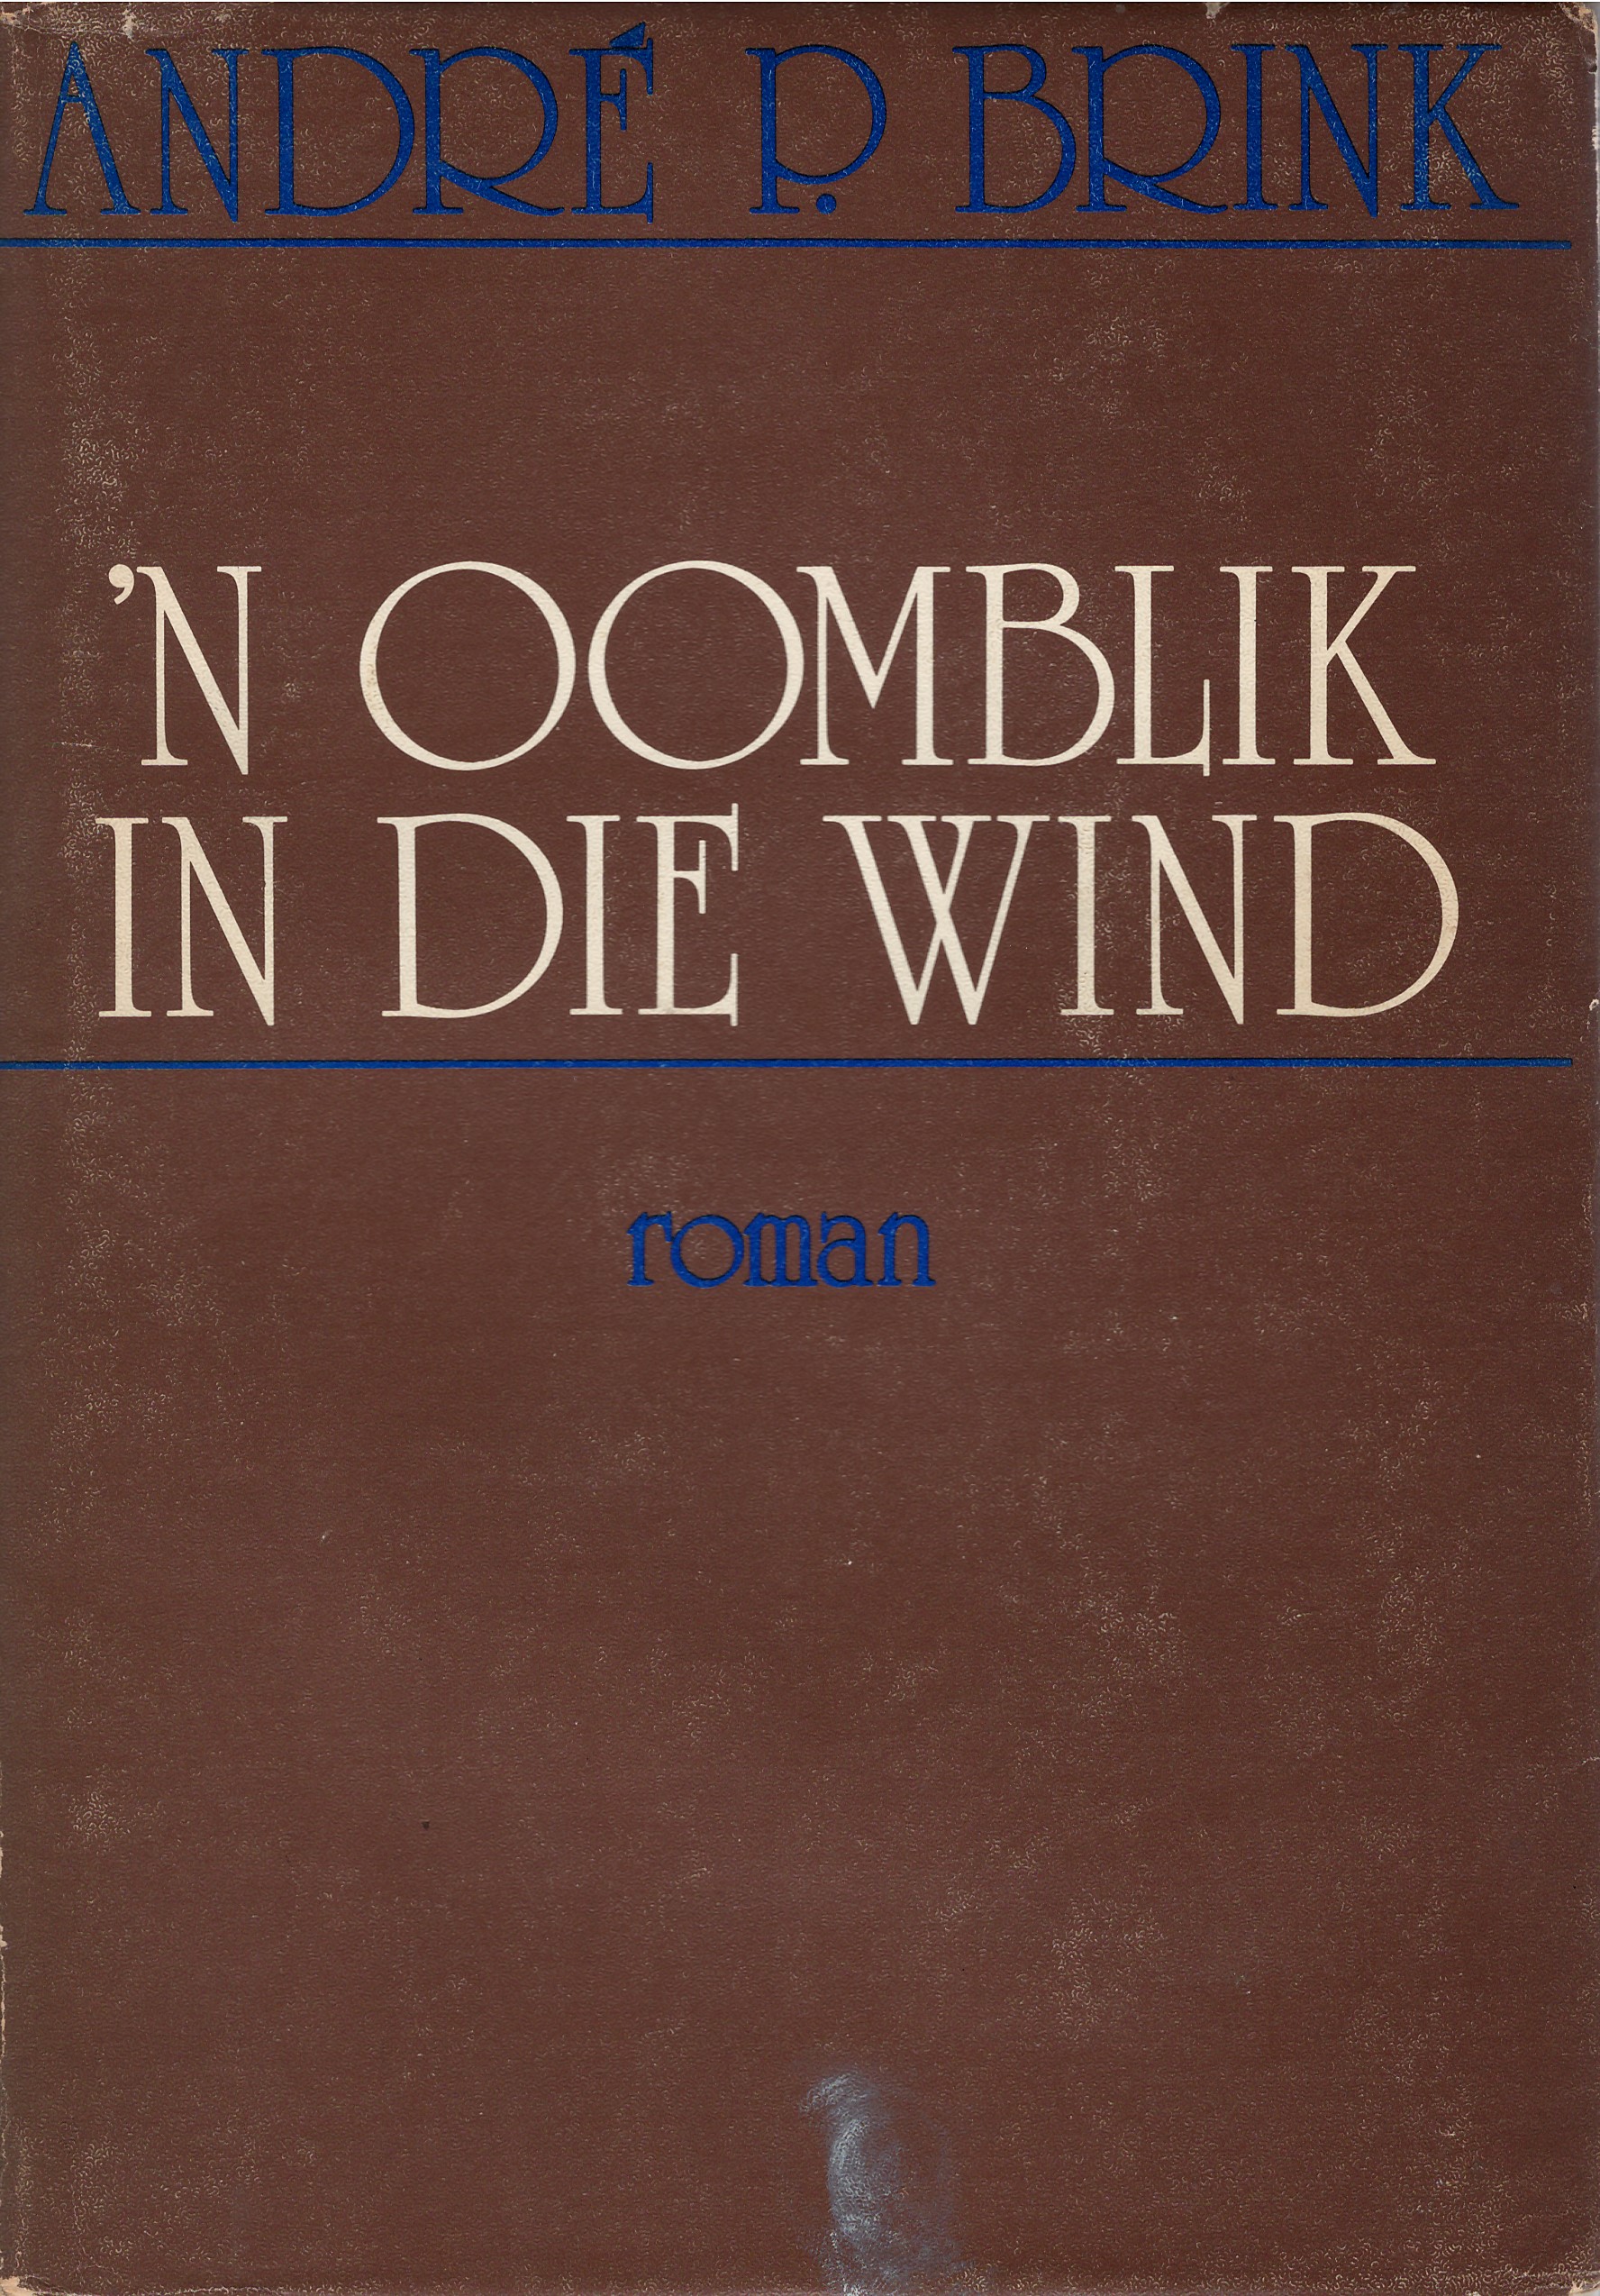 'Oomblik', 1st edition, Afrikaans